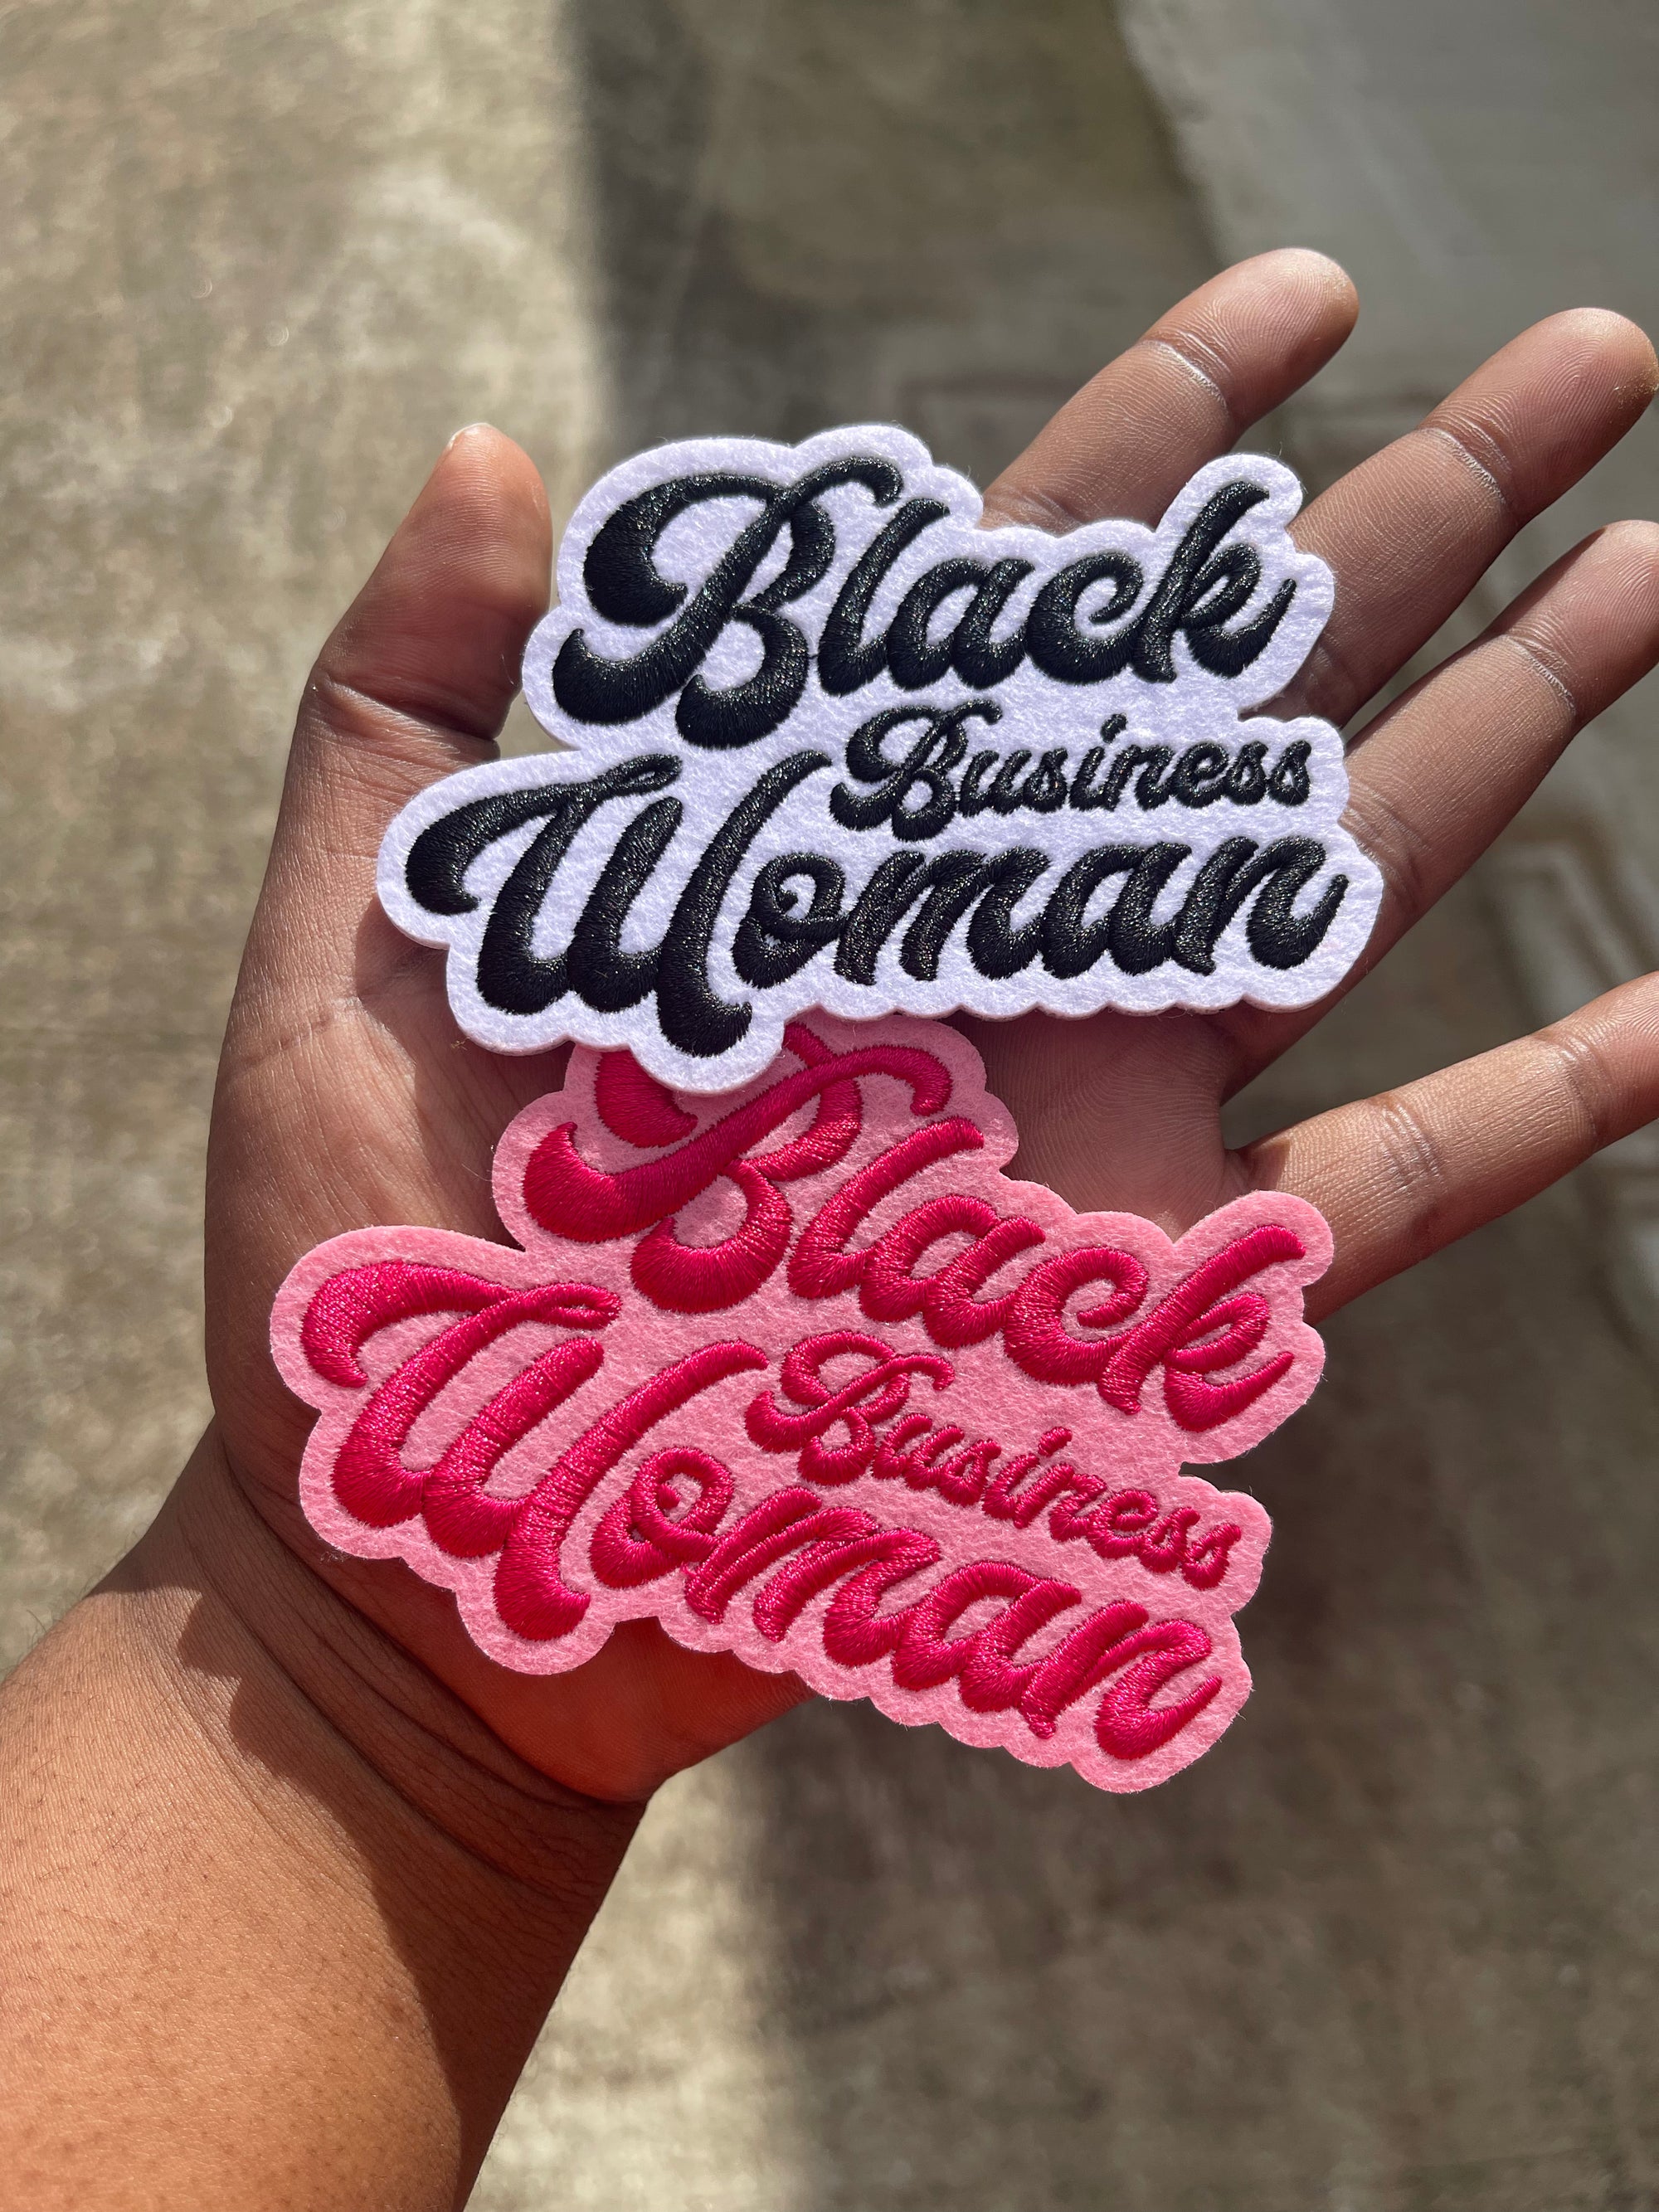 Black Business Woman Patch